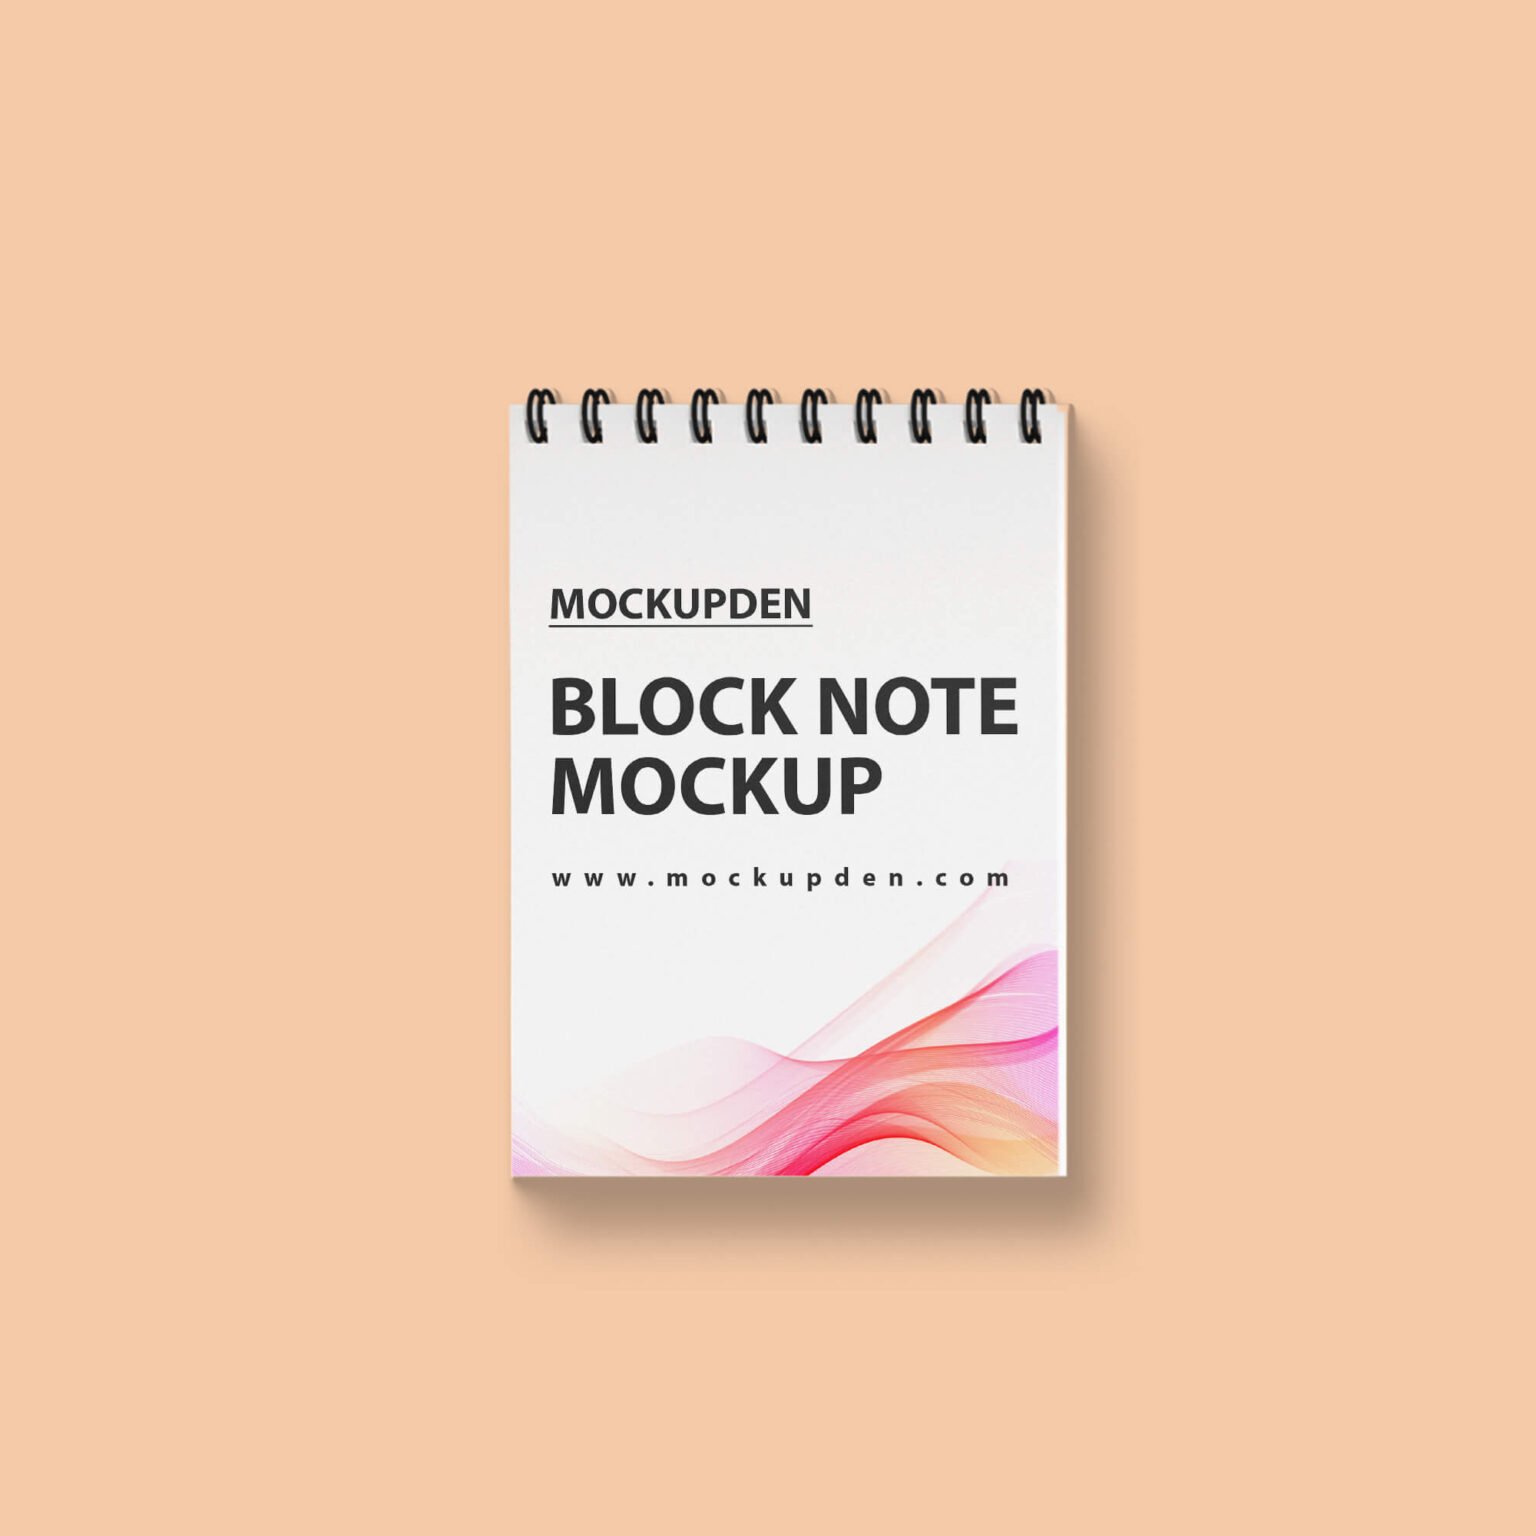 Free Block Note Mockup PSD Template - Mockup Den